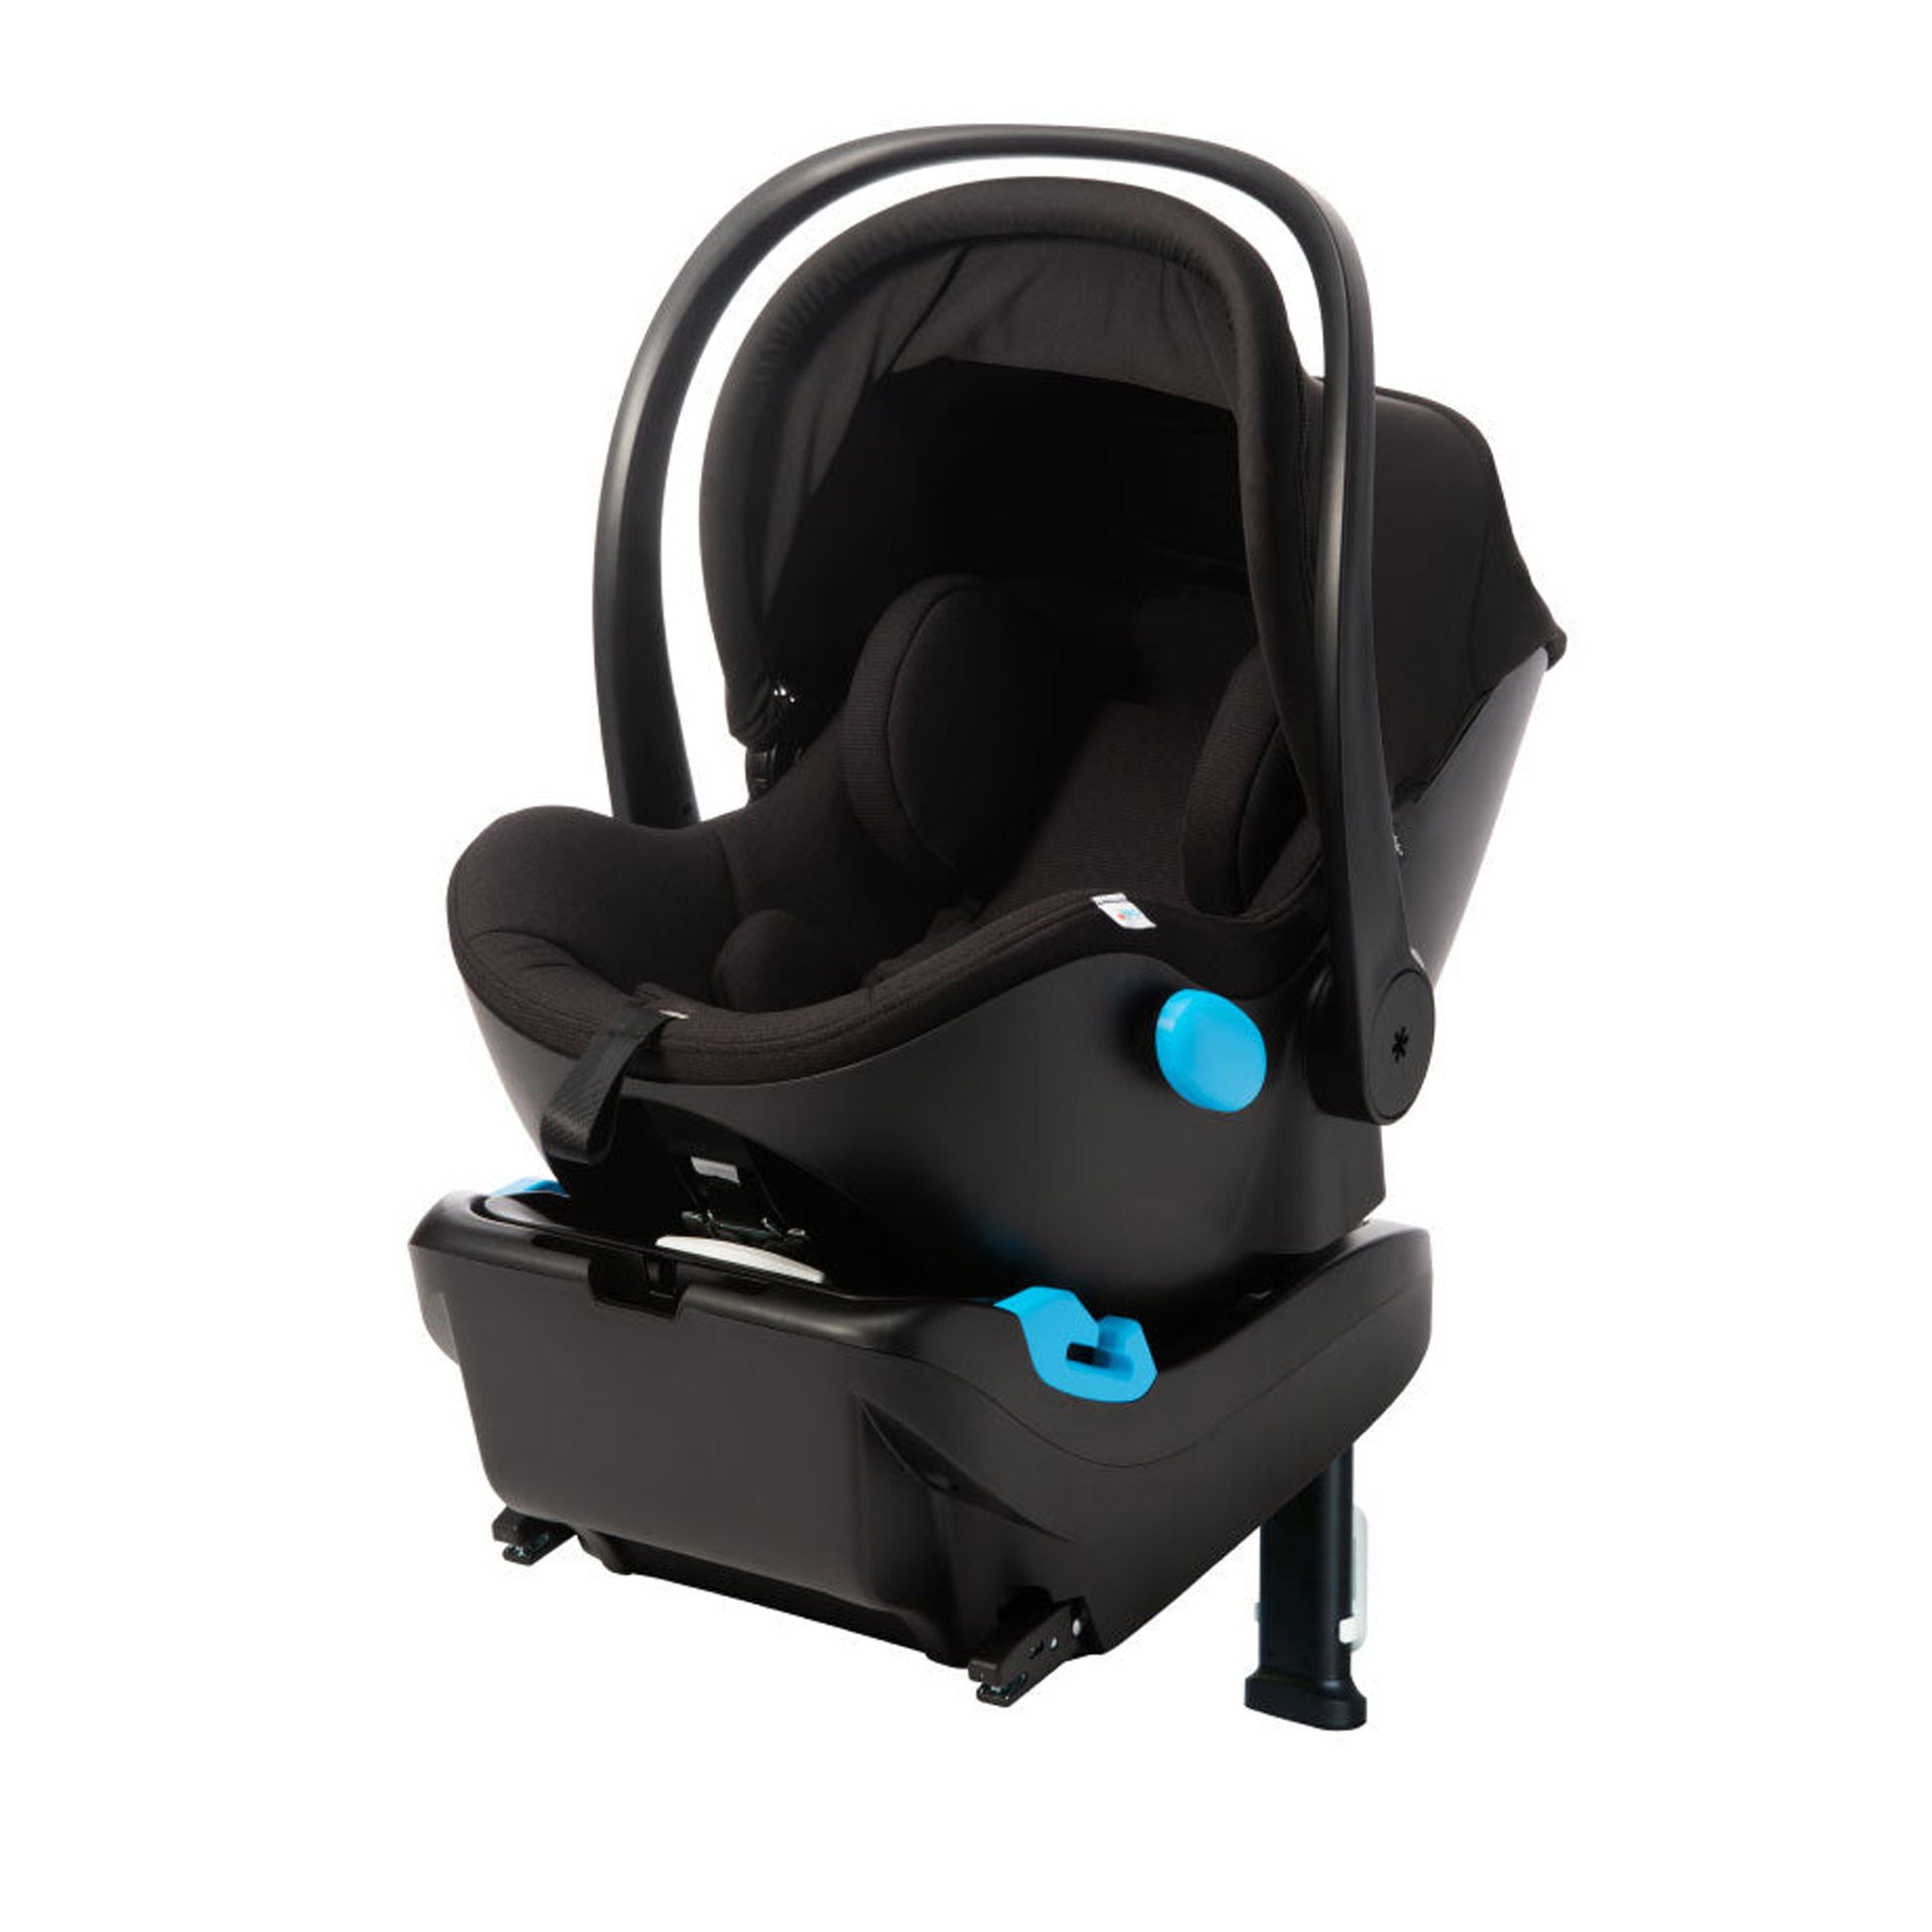 Clek Liing Infant Car Seat - Carbon